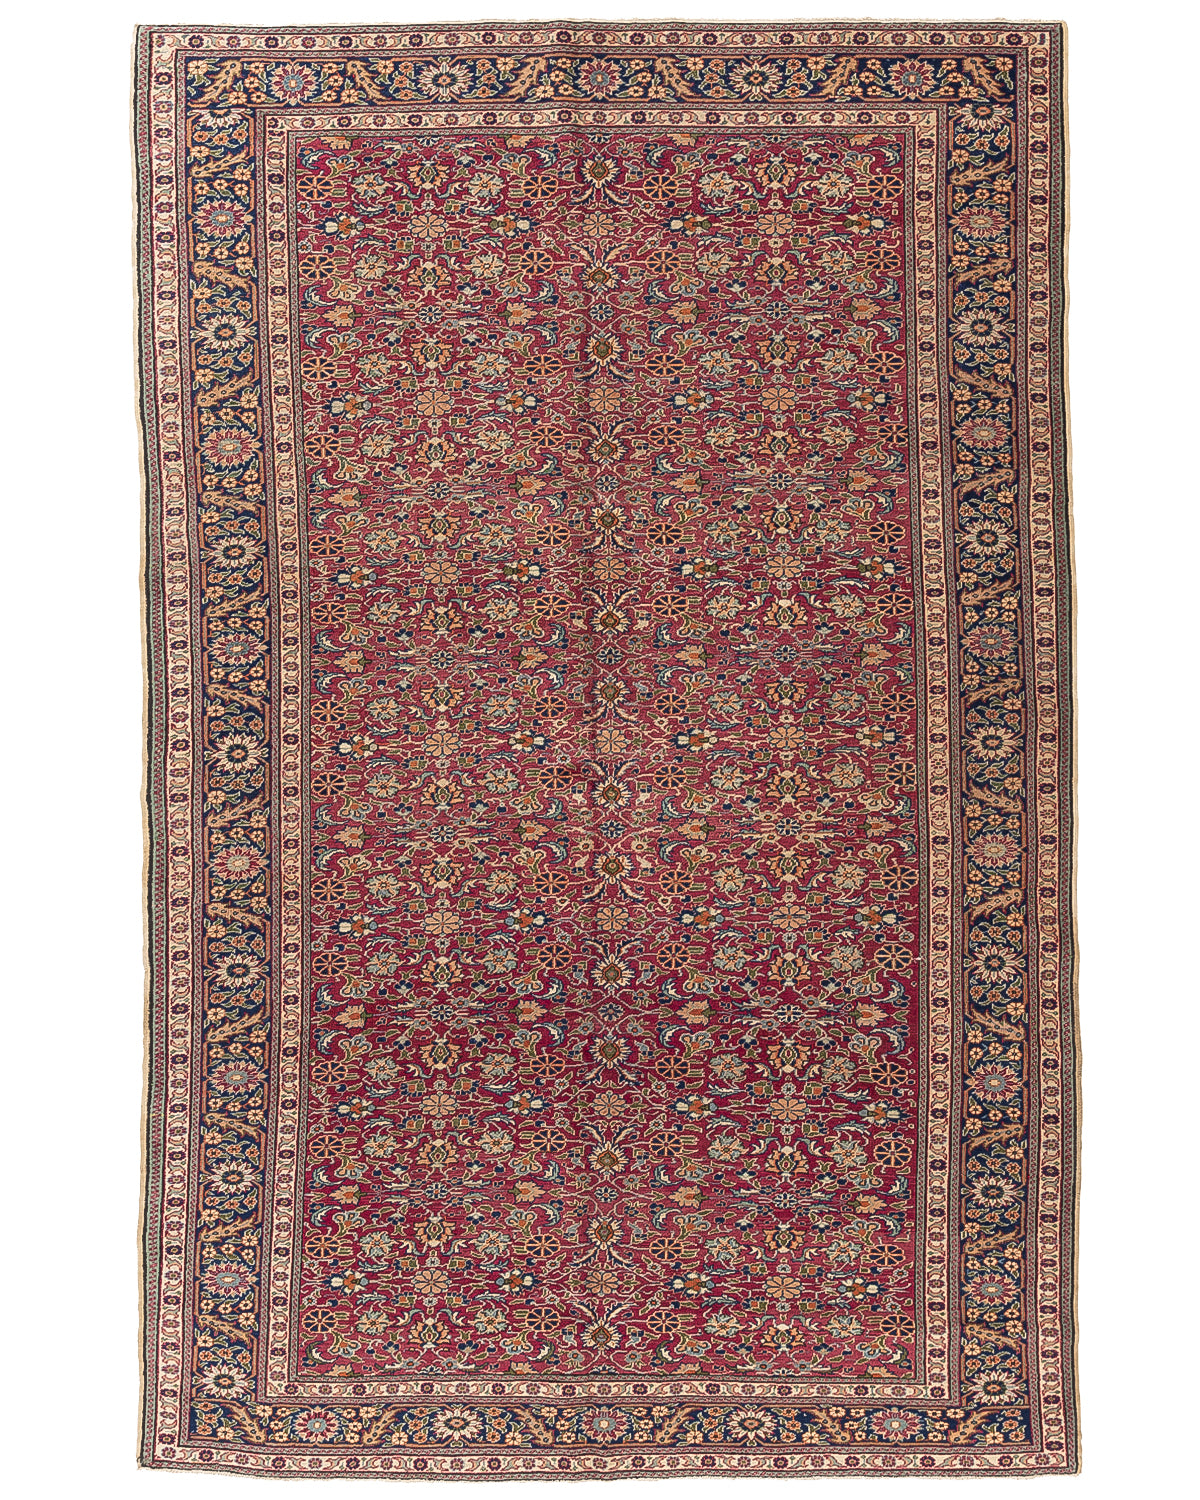 Oriental Rug Anatolian Handmade Wool On Cotton 210 X 310 Cm - 6' 11'' X 10' 3'' Fuchsia C021 ER23